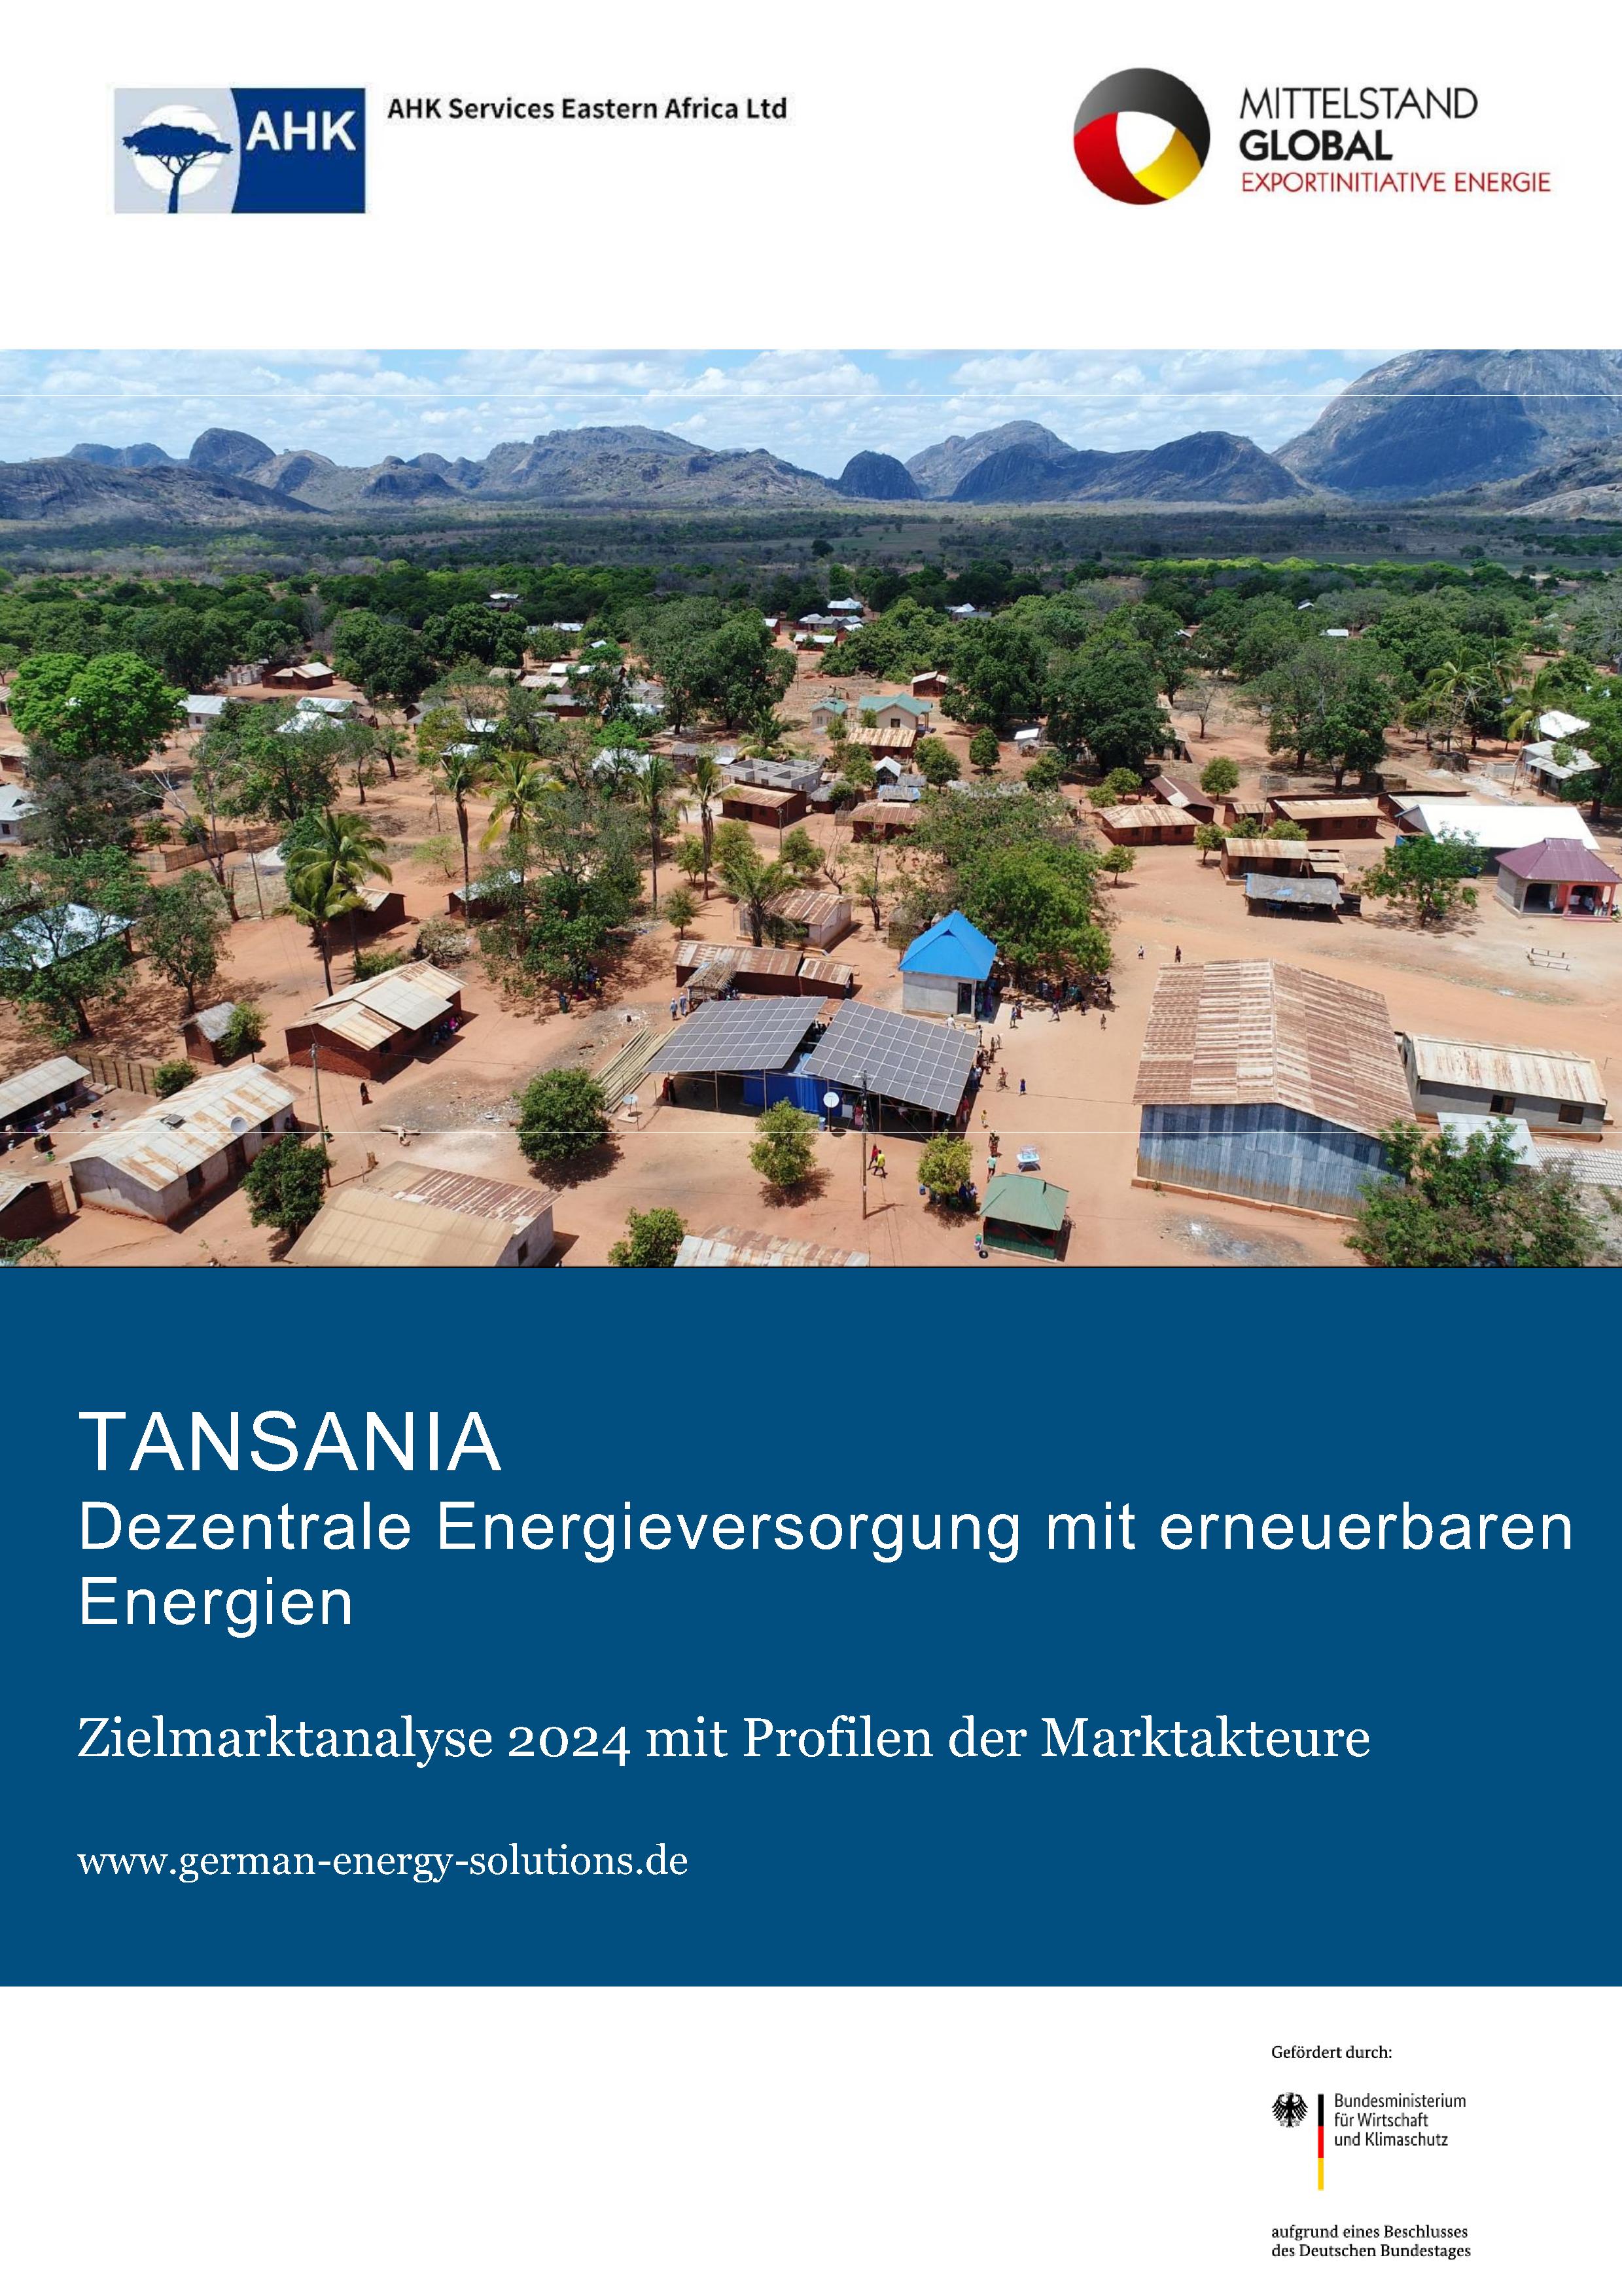 Dezentrale Energieversorgung mit erneuerbaren Energien in Tansania